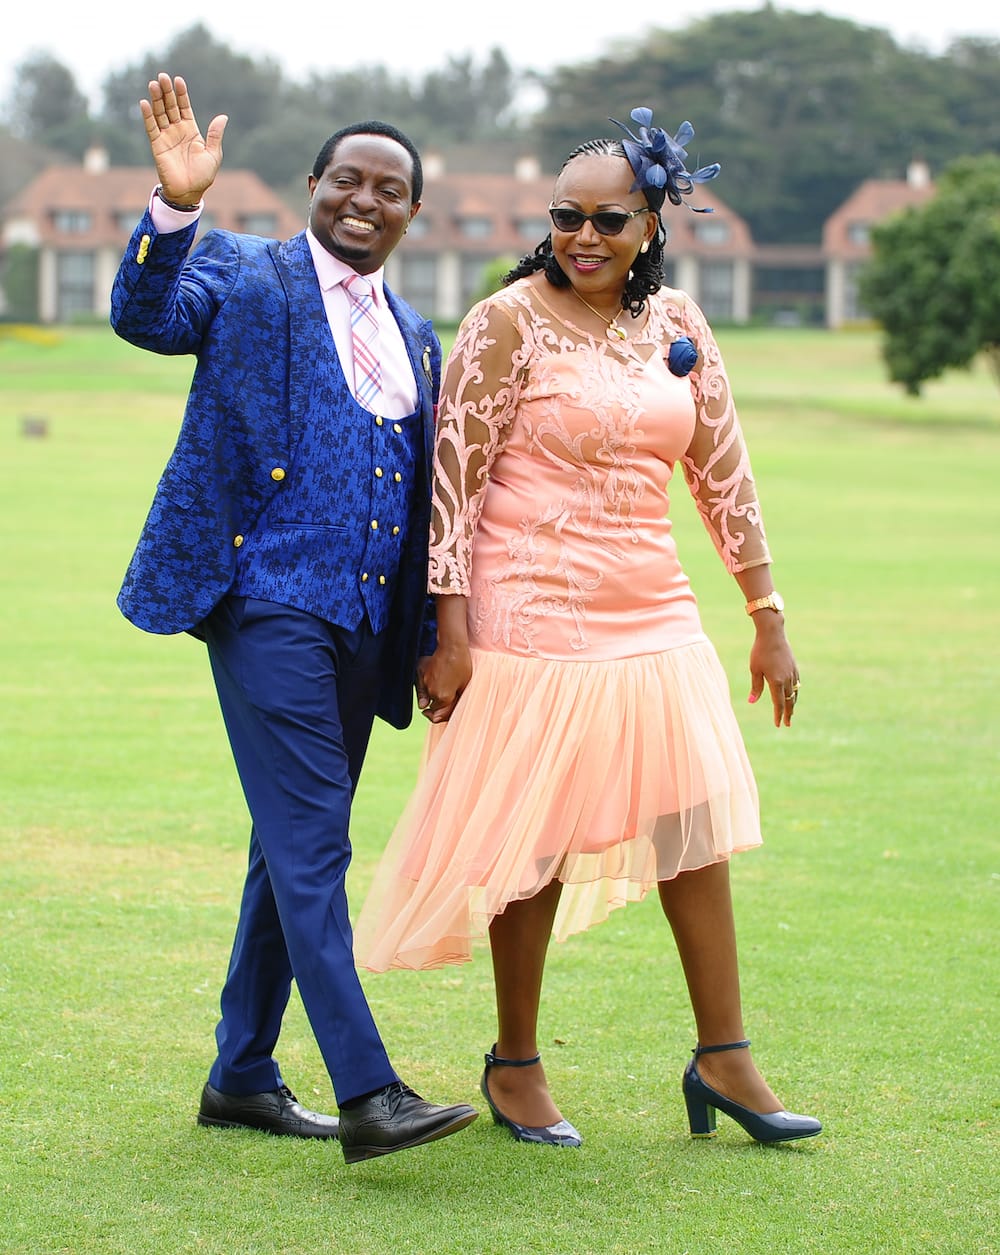 Nairobi evangelist says she broke a childhood vow on her wedding day